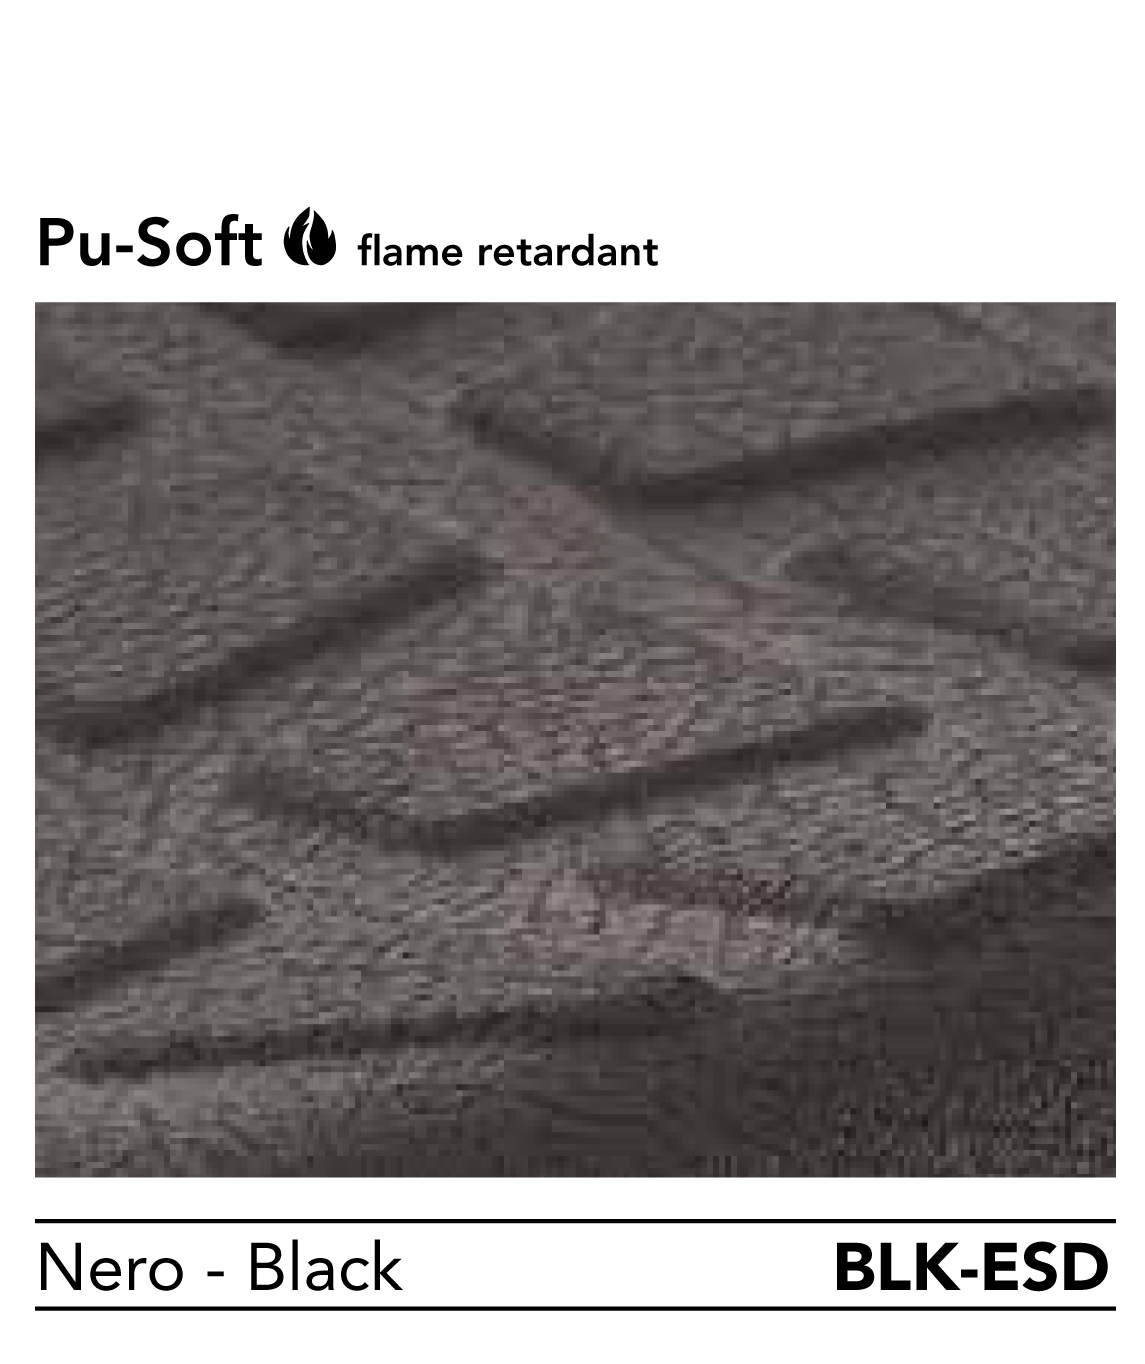 PUsoft flame retardant – BLK-ESD Nero Black